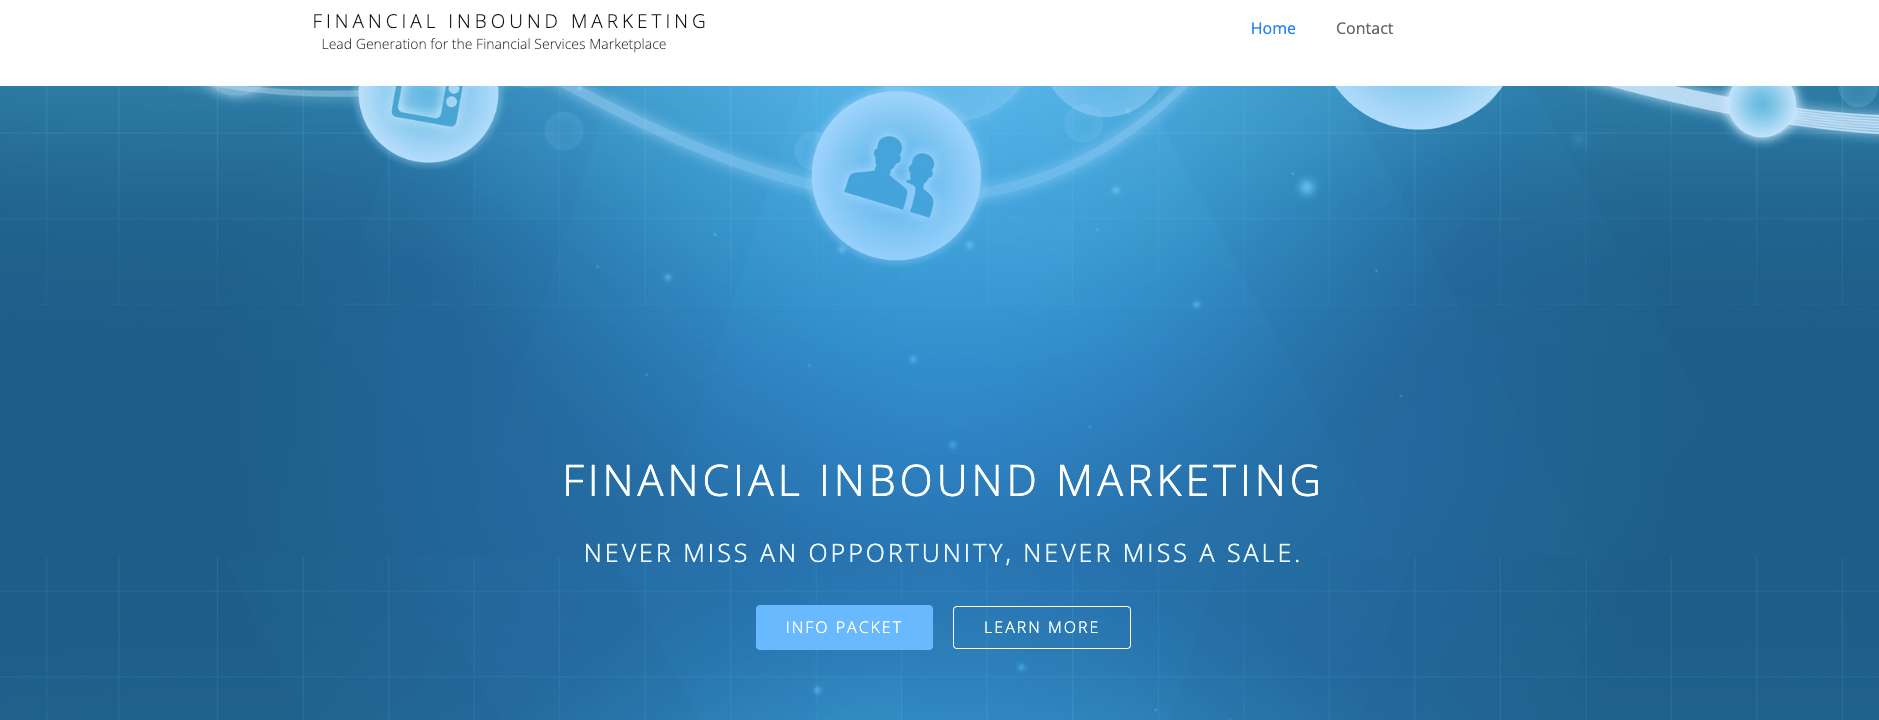 Landing page of Financial Inbound Marketing